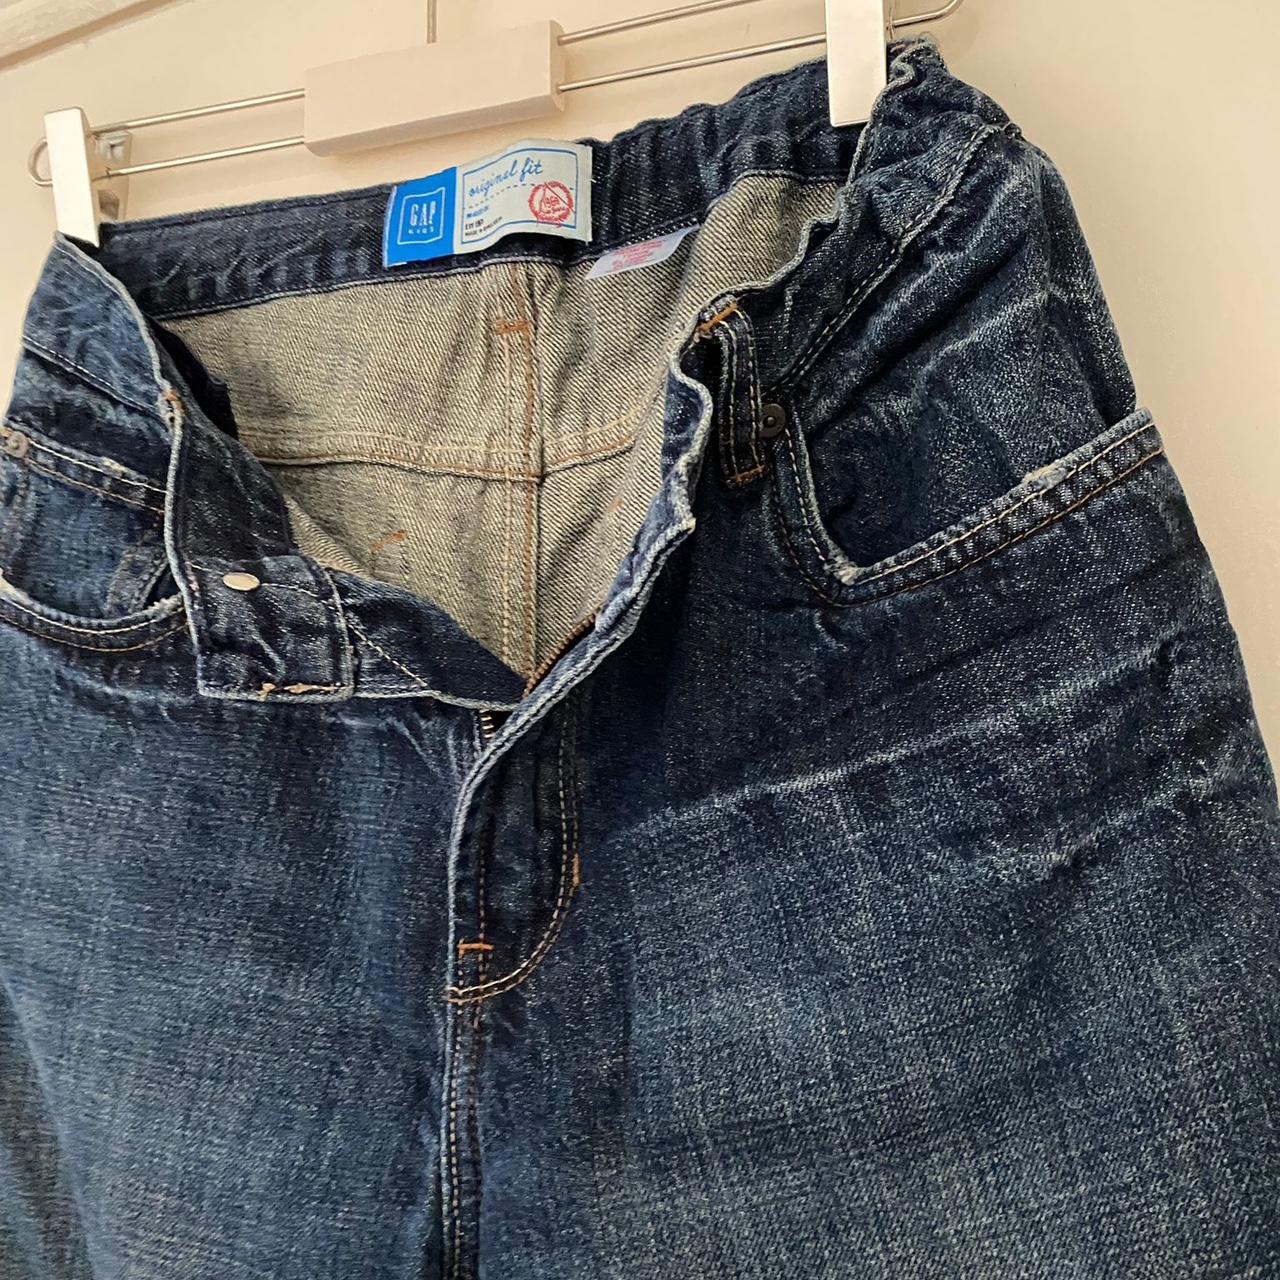 Gap original fit baggy medium rise jeans with... - Depop